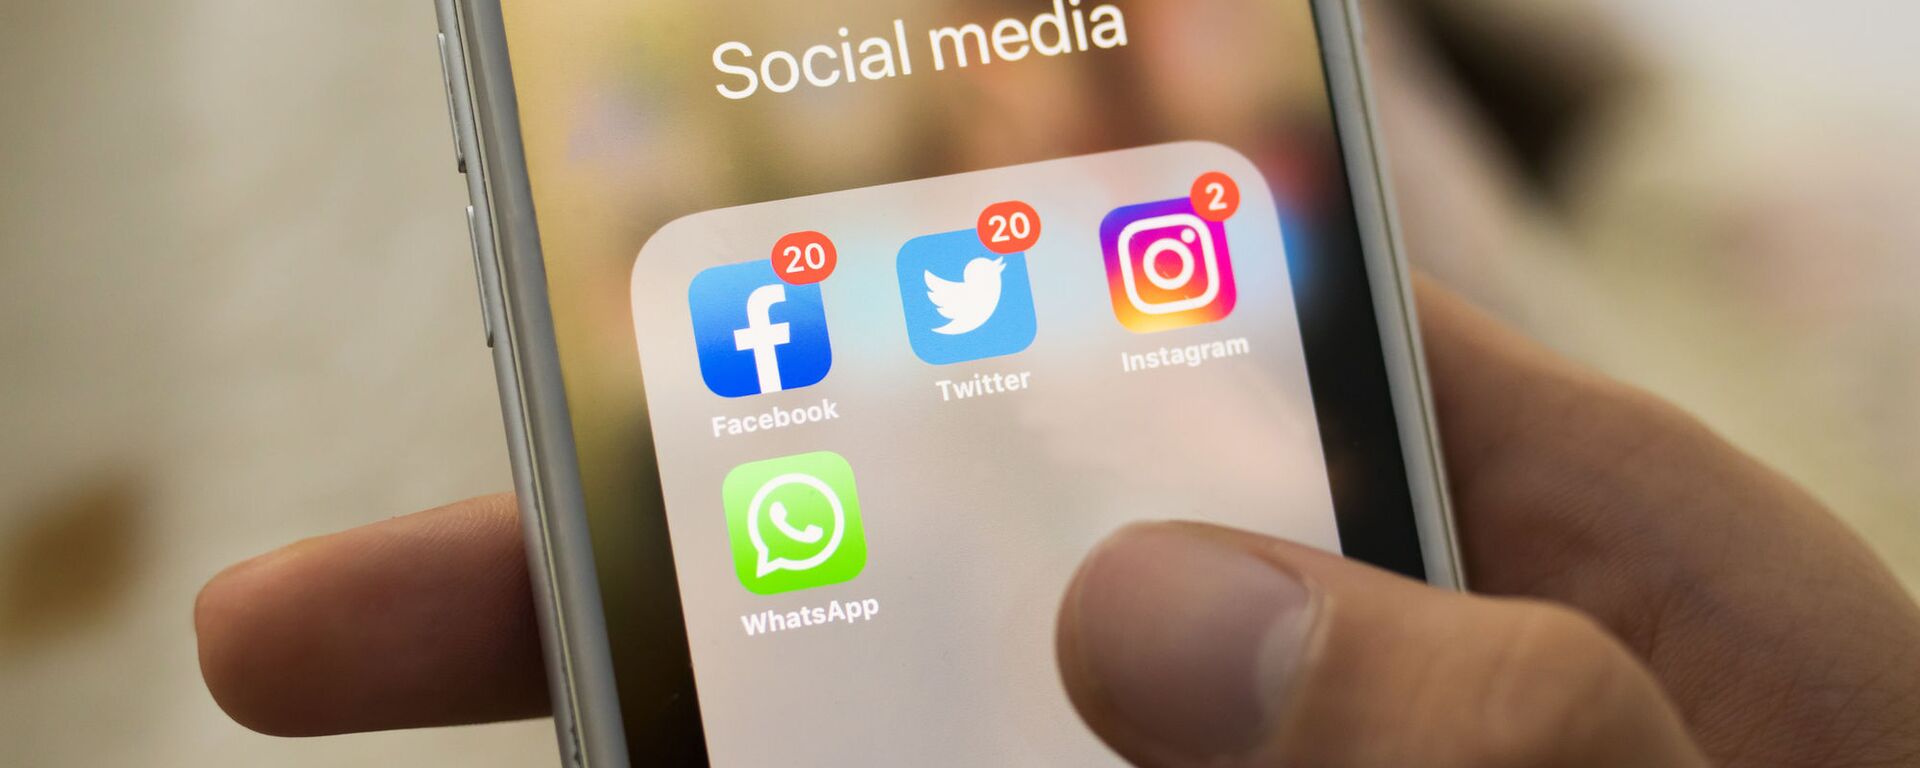 Иконки Facebook, Twitter, Instagram, WhatsApp на экране смартфона - Sputnik Azərbaycan, 1920, 07.05.2021